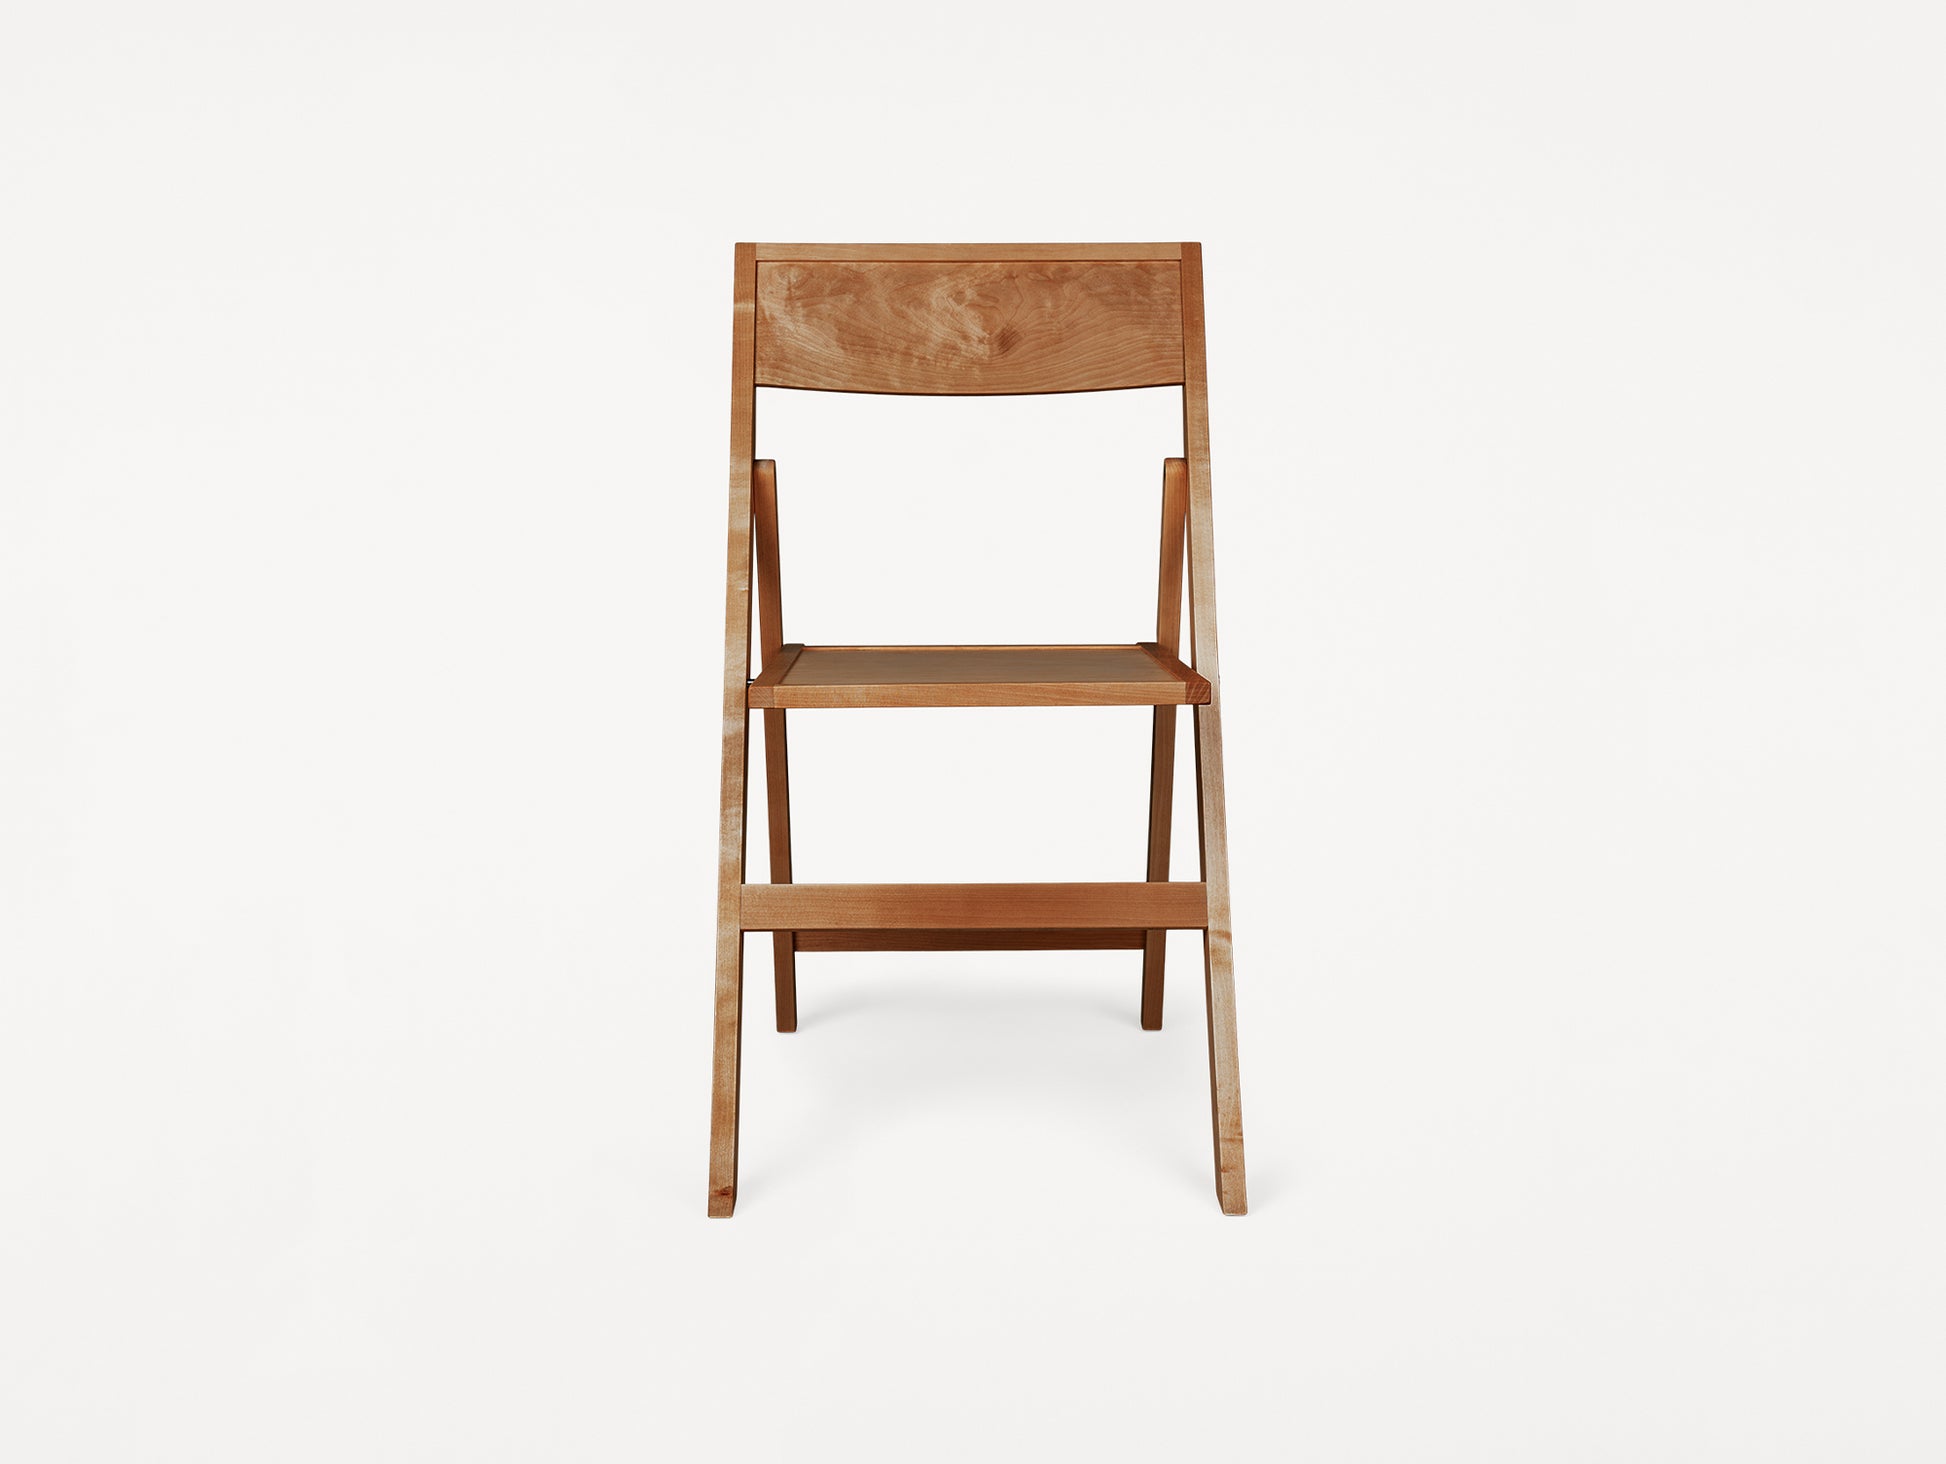 Folding Flat Chair by Frama - Warm Brown Oiled Birch